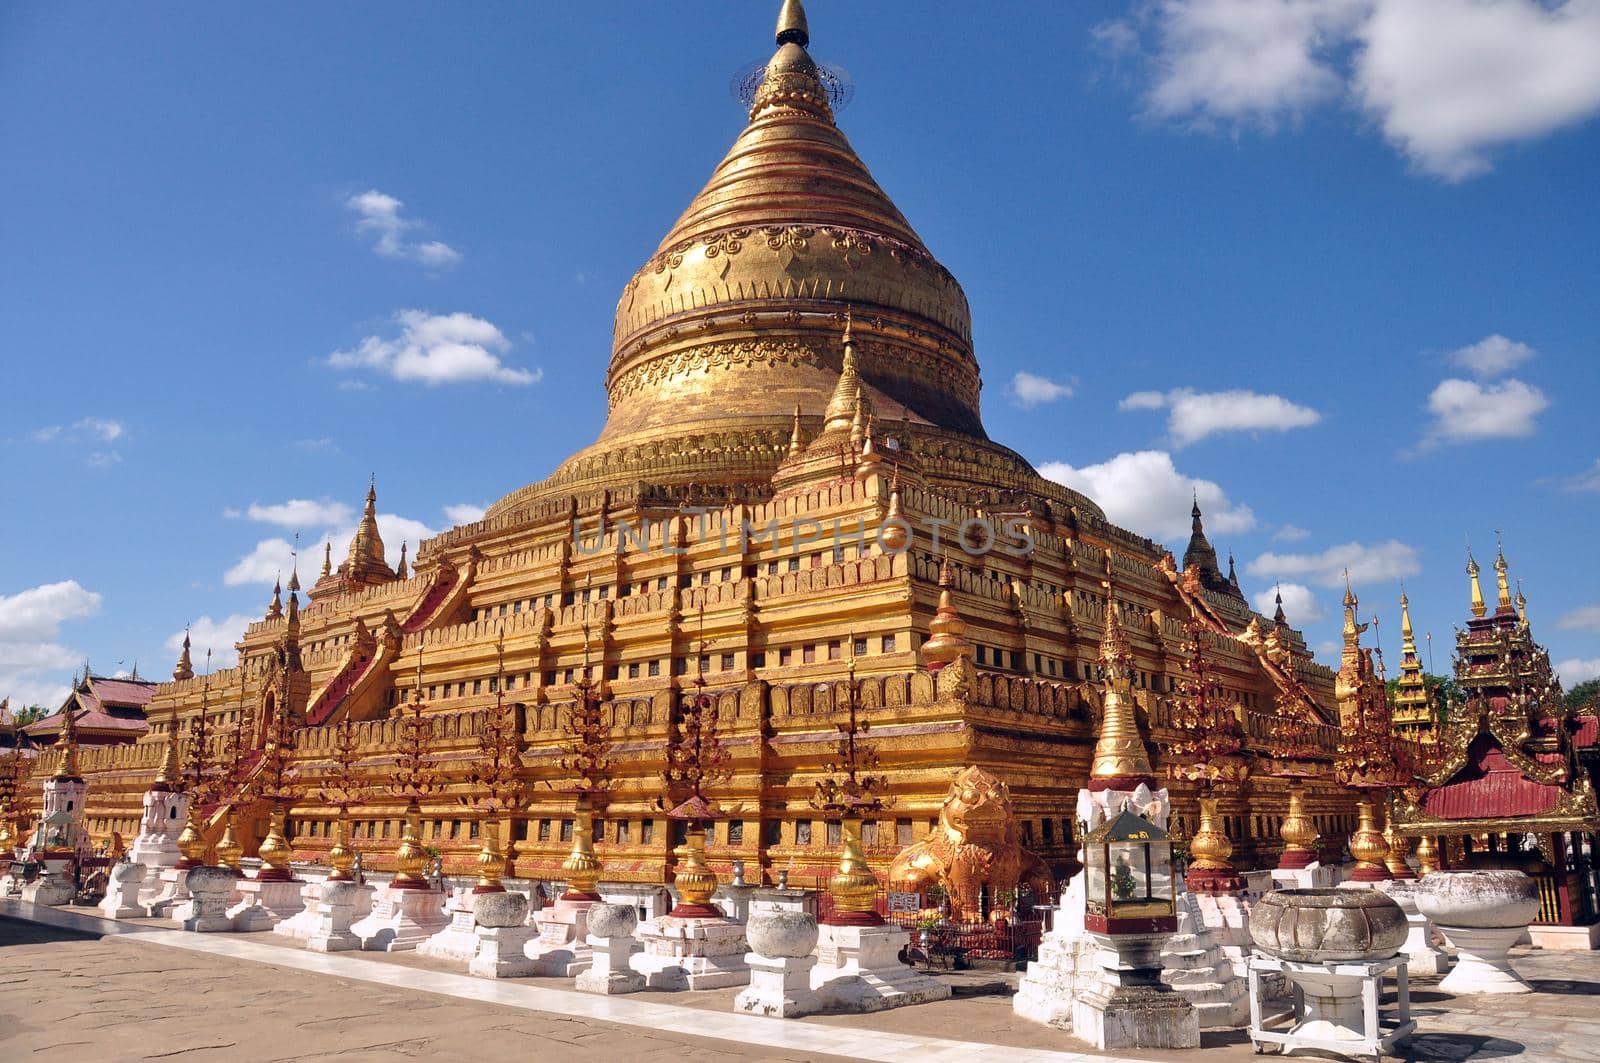 BAGAN, MYANMAR - NOVEMBER 18, 2015: Sacred Shwezigon pagoda. Golden paya, buddhist temple in old ancient capital in Burma. Famous tourist destination. Mingalazedi Sulamani Shwezigon Ananda Htilominlo